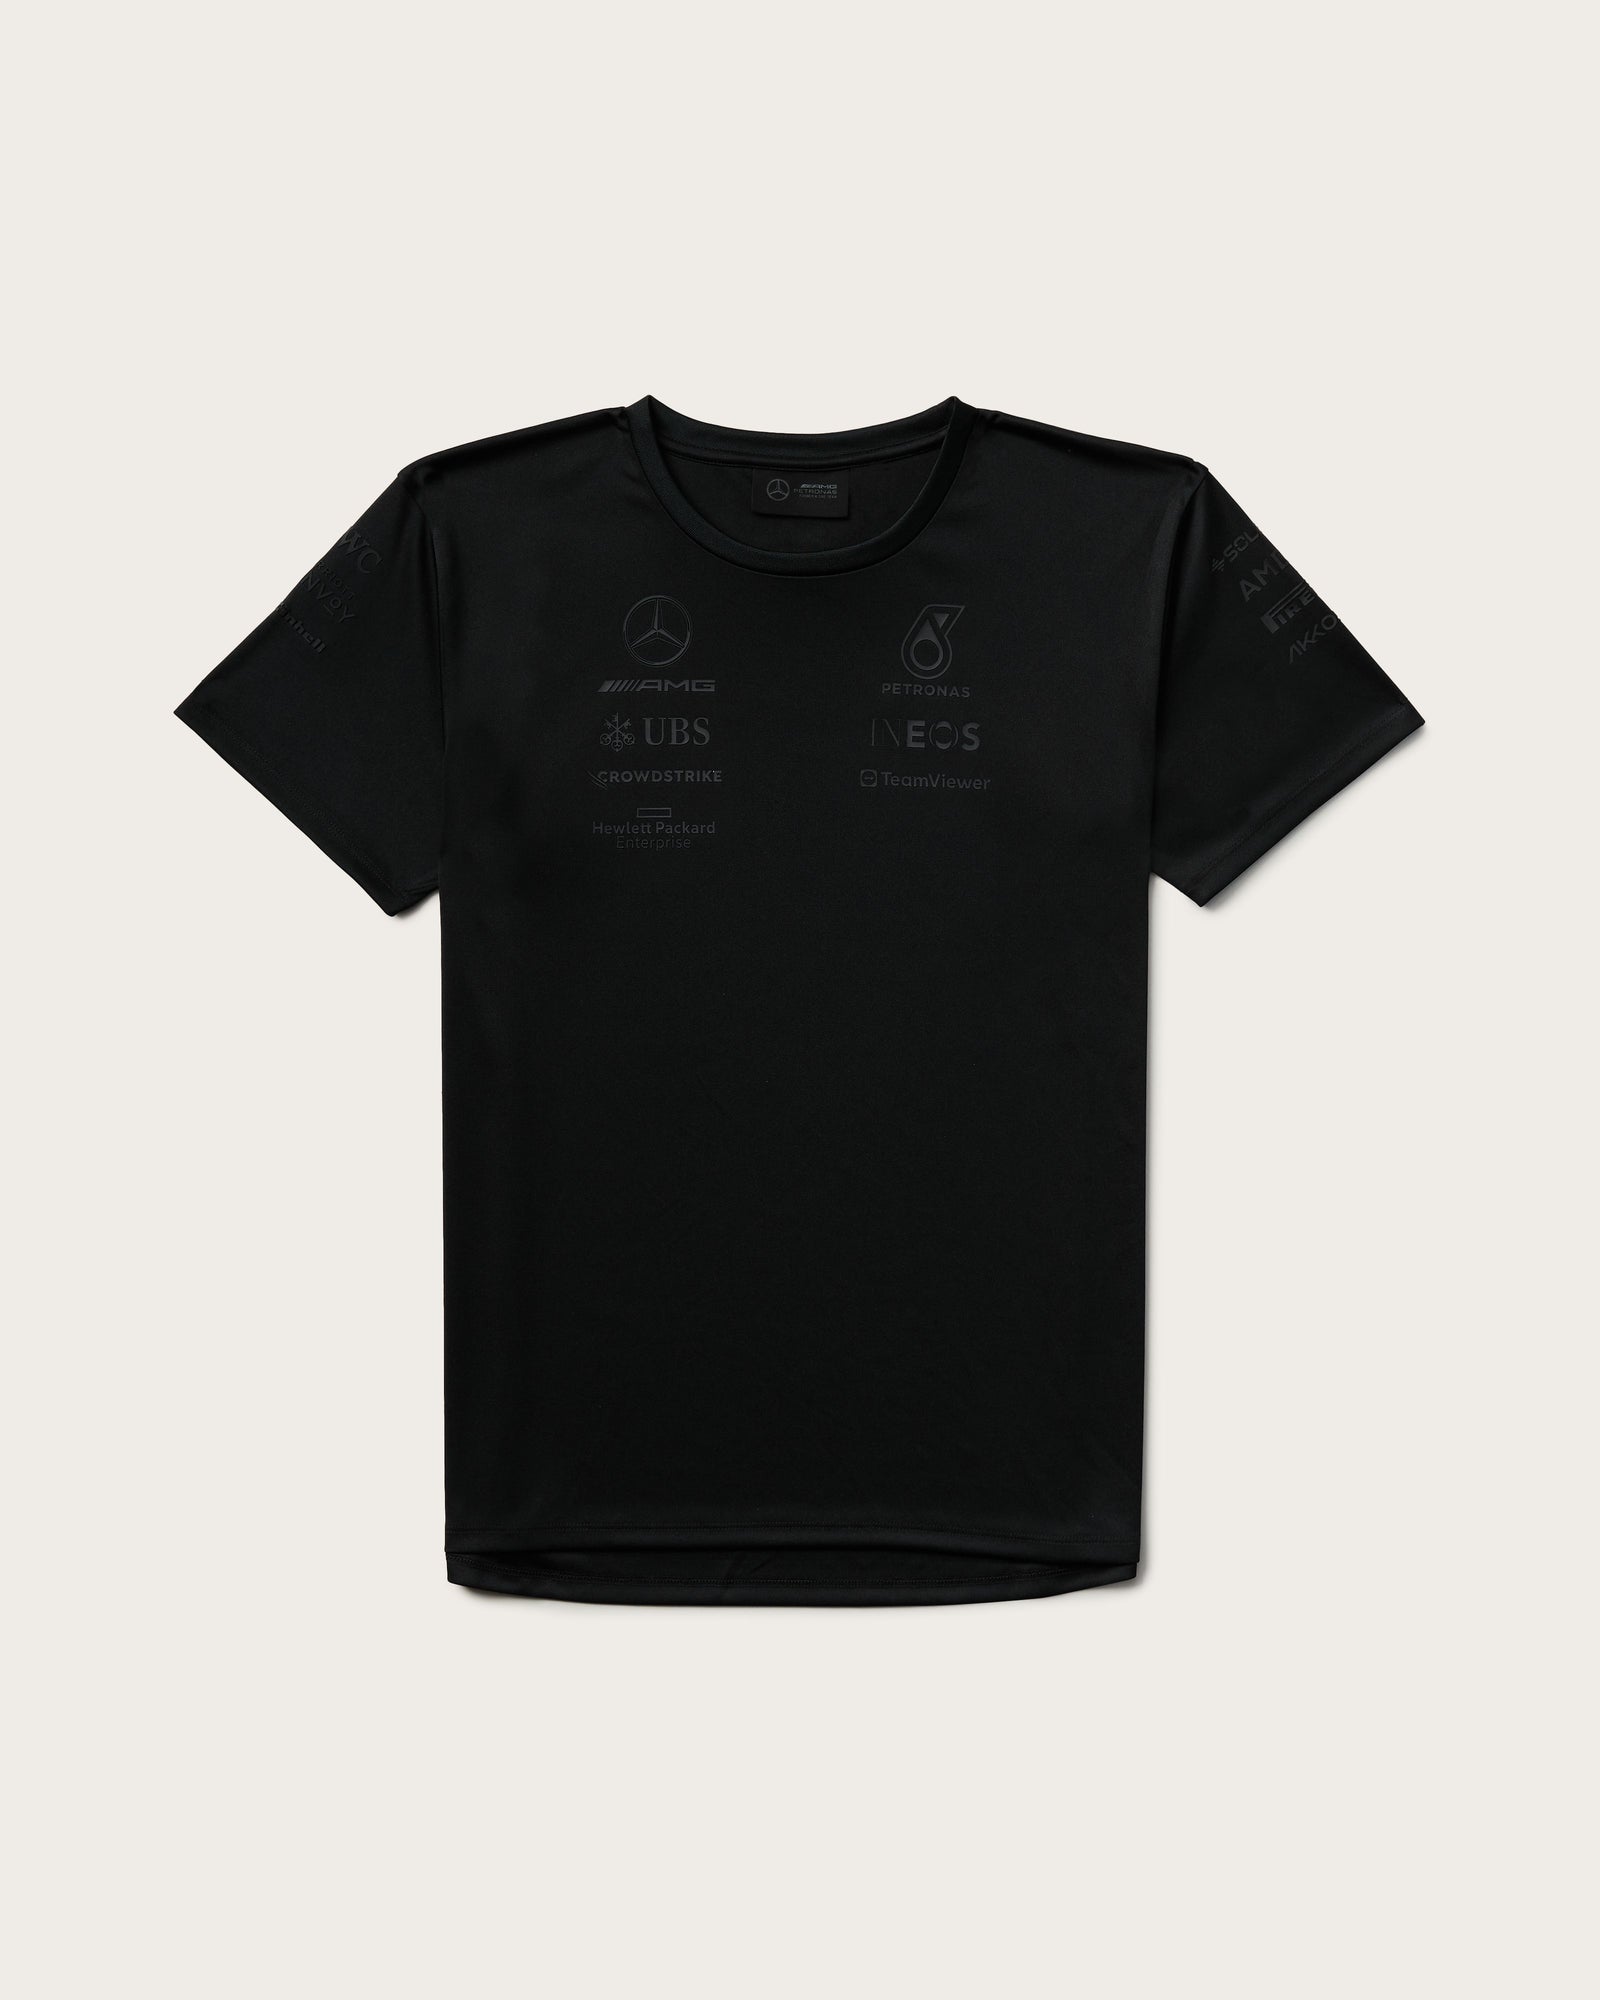 Free Roblox T-shirt black lose buttoned shirt 🖤